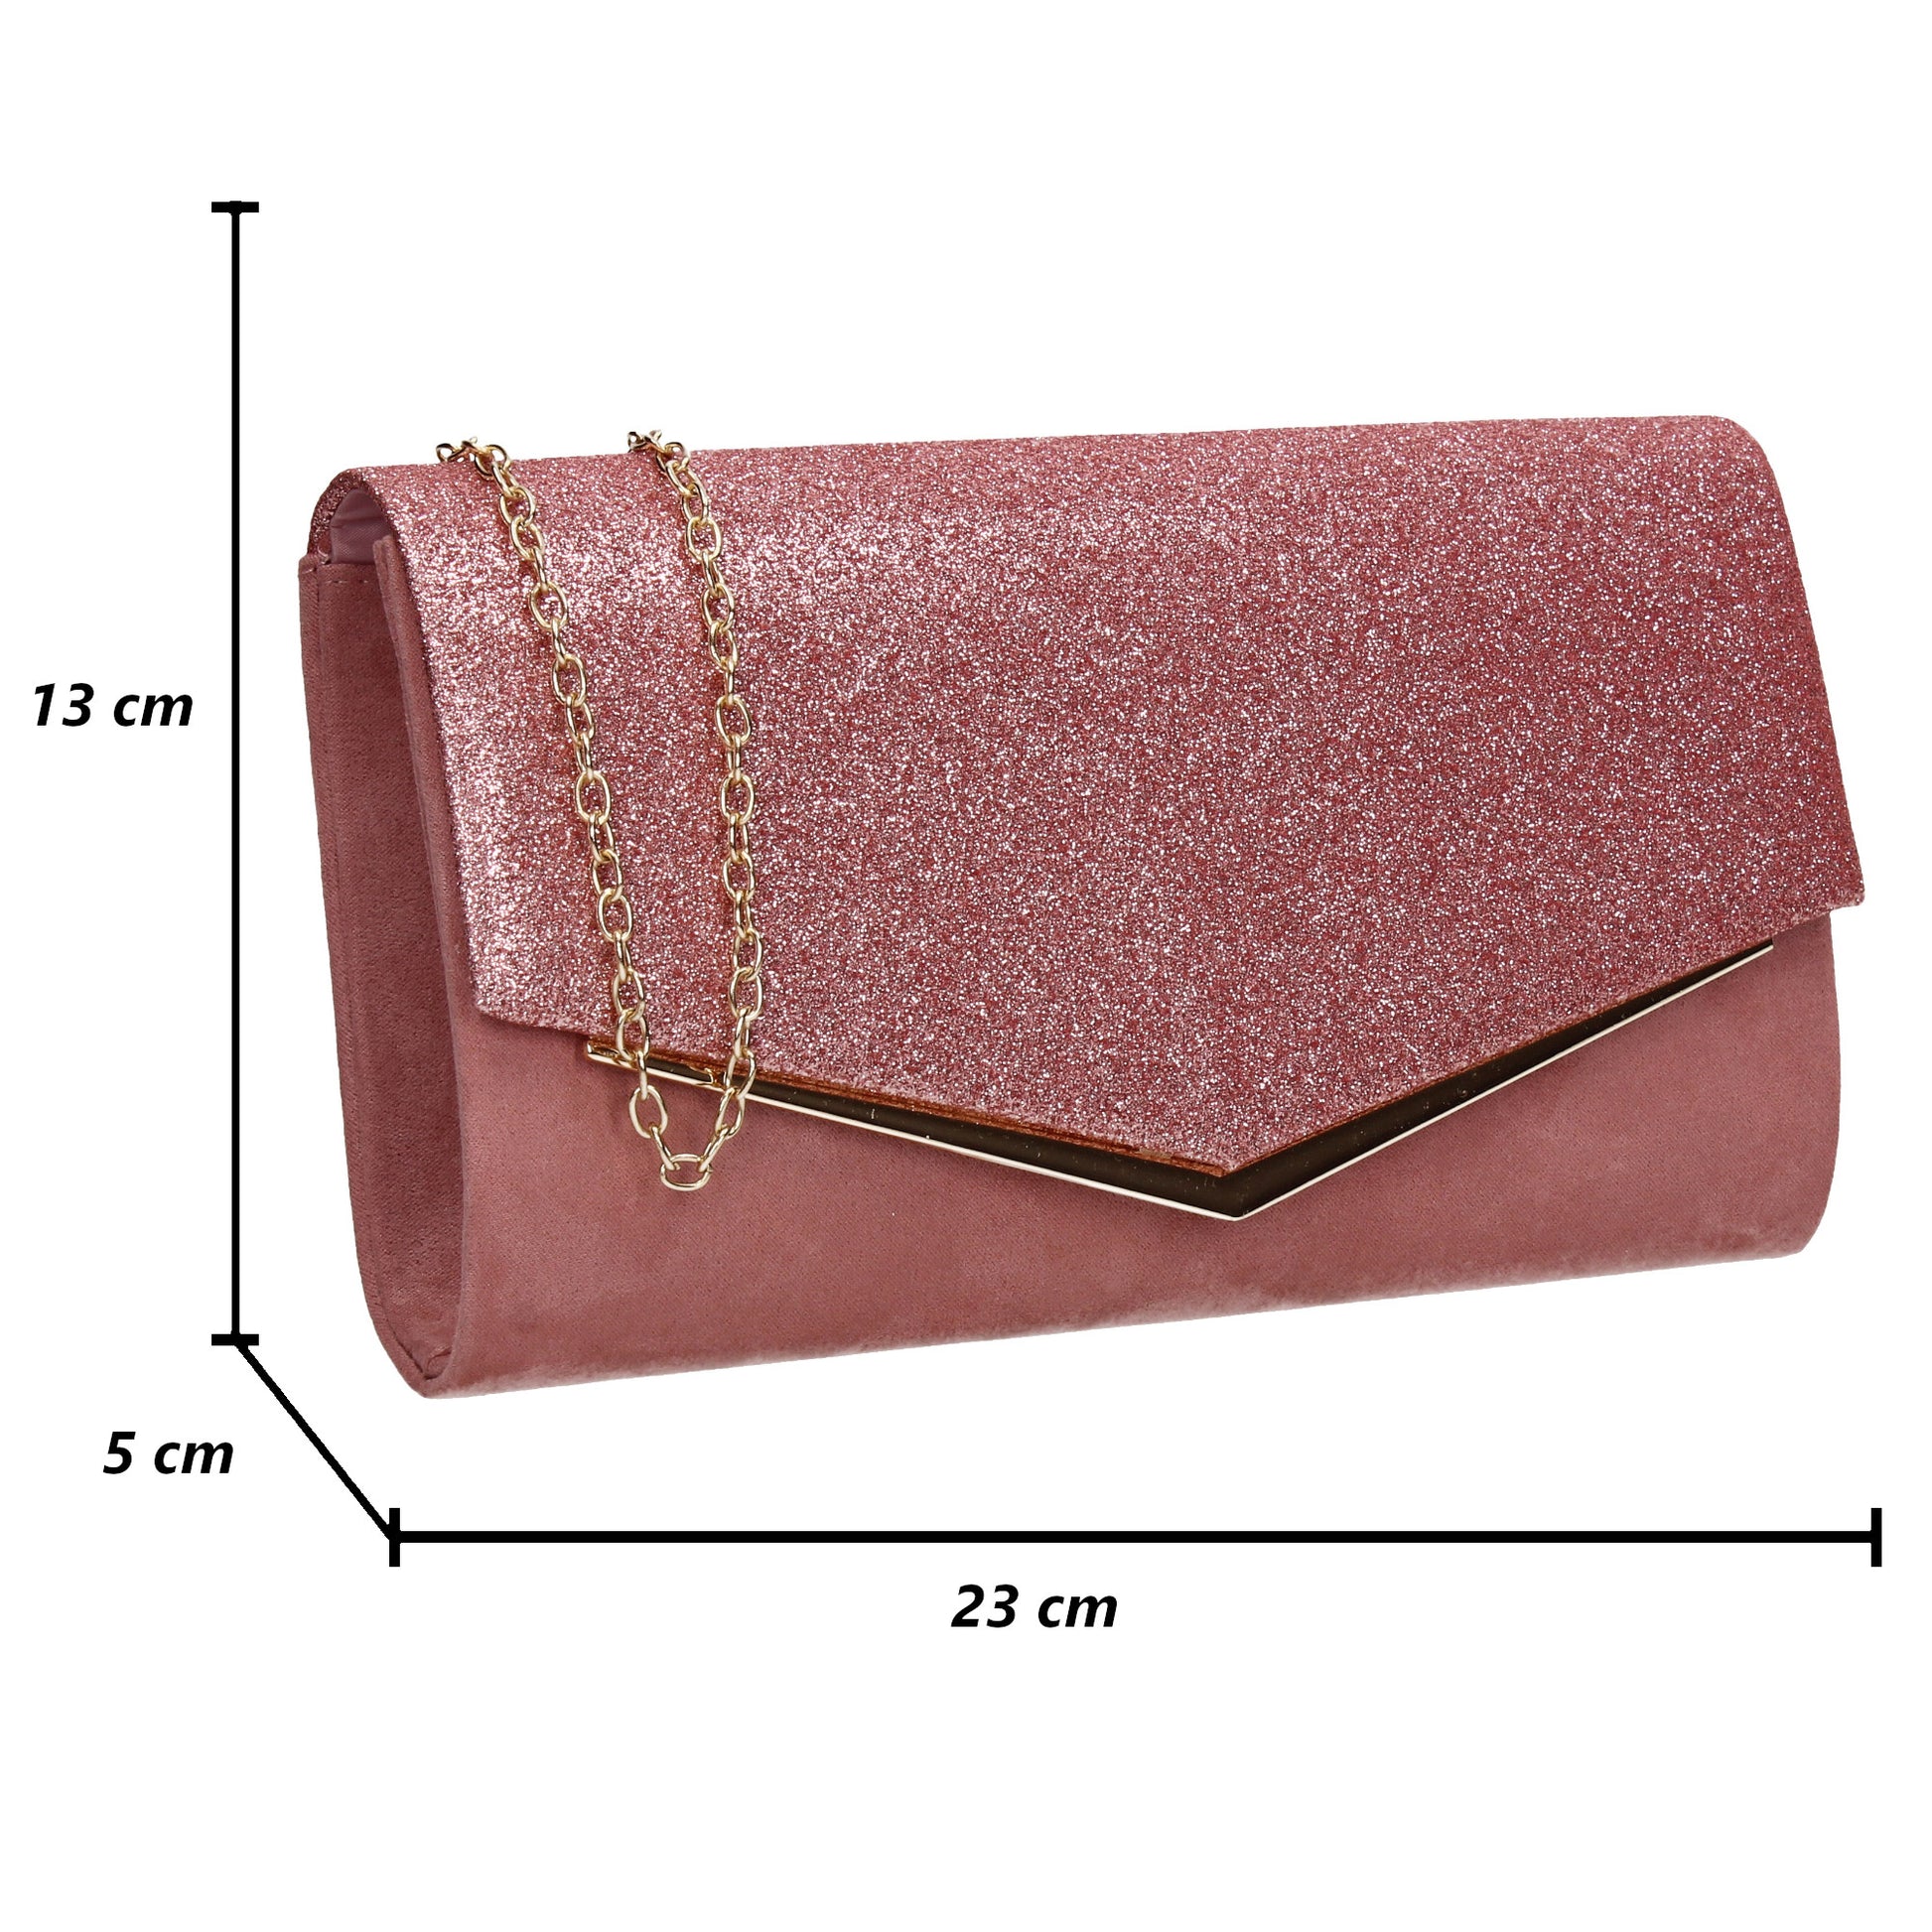 SWANKYSWANS Janey Clutch Bag Blush Cute Cheap Clutch Bag For Weddings School and Work